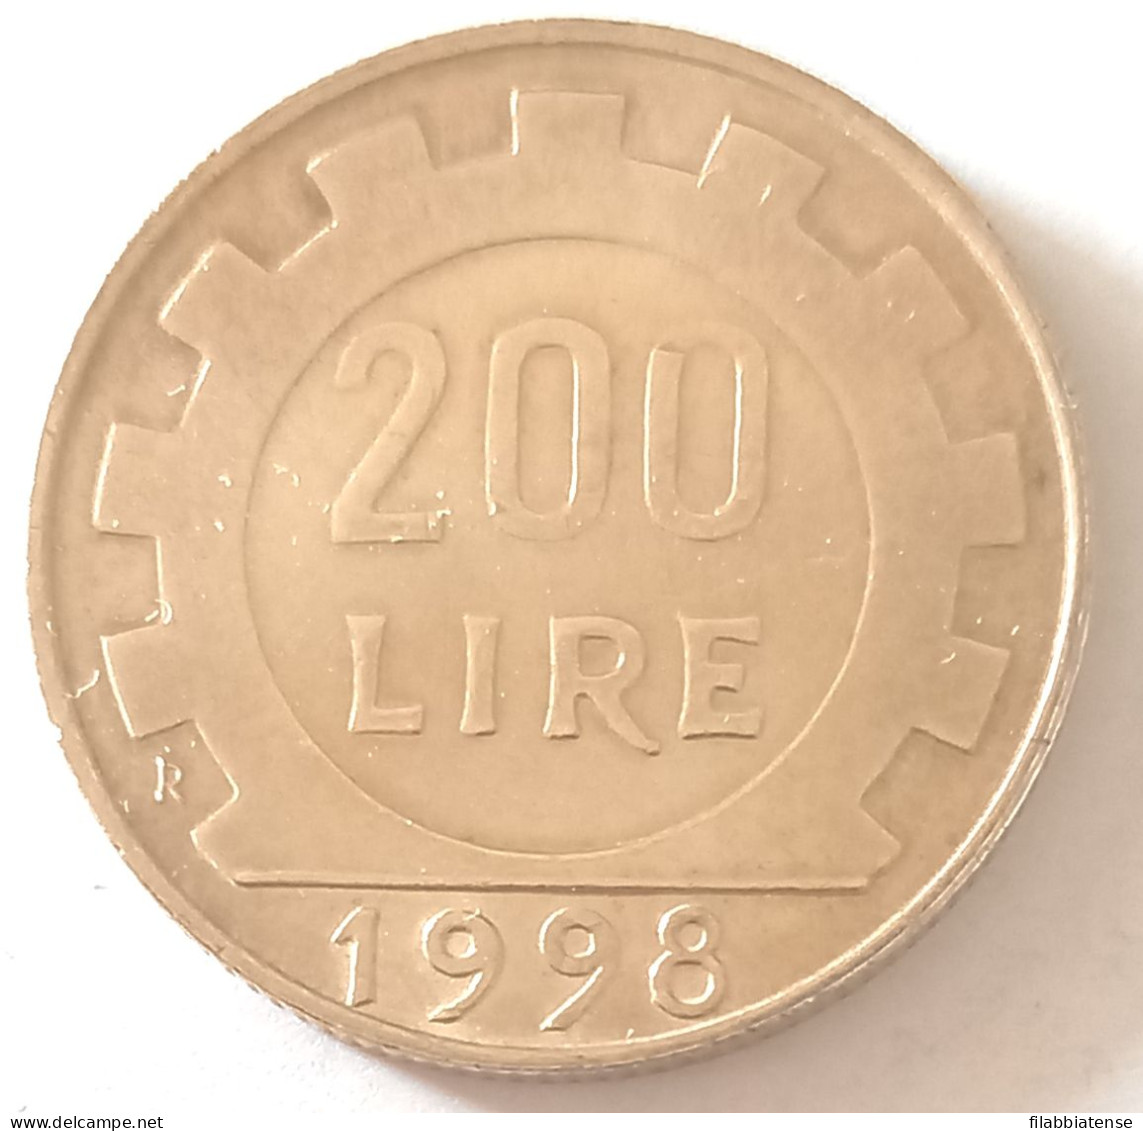 1998 - Italia 200 Lire   ----- - 200 Lire